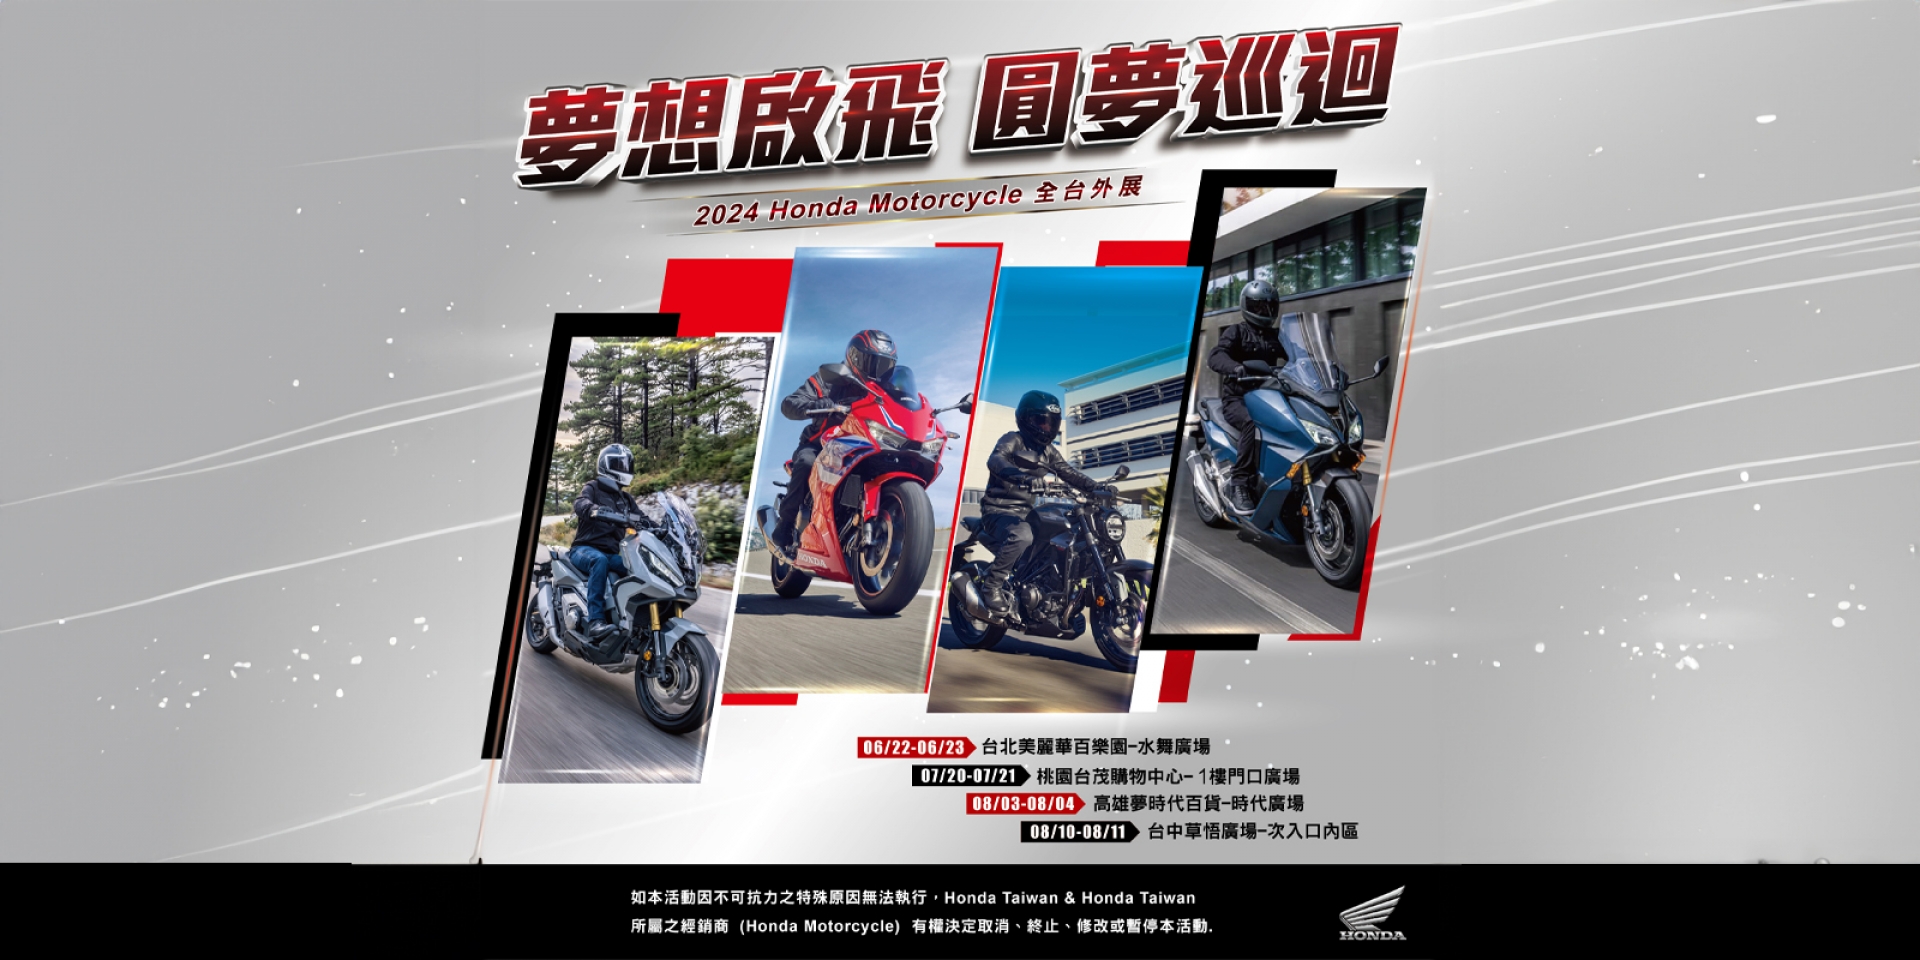 2024 Honda Motorcycle人氣車款全台外展 「夢想啟飛 圓夢巡迴」